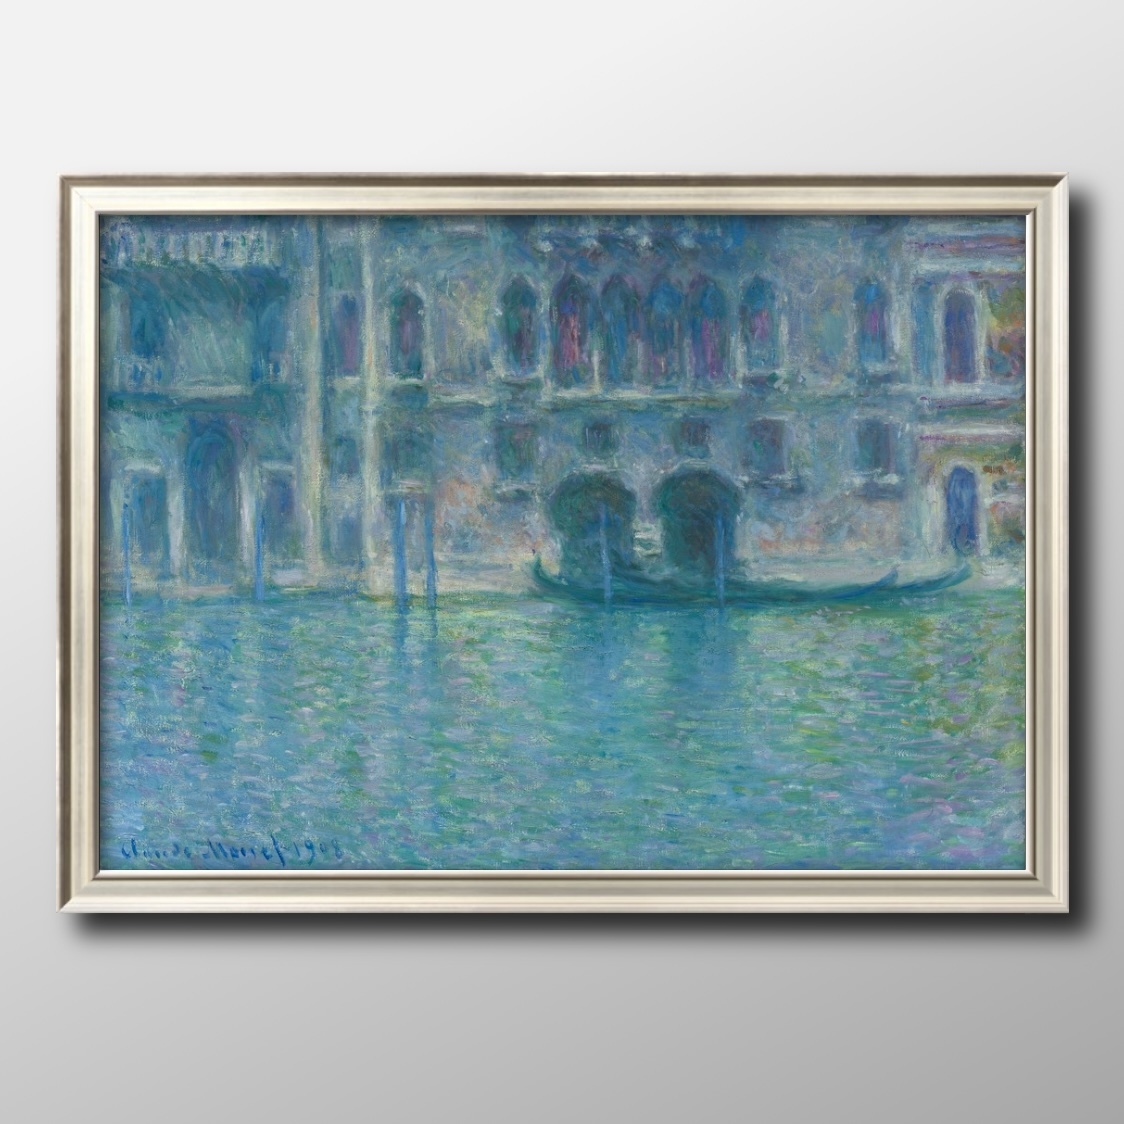 1057■¡Envío gratis! Póster artístico pintura tamaño A3 Claude Monet Venecia, Ilustración Palazzo da Mura papel mate escandinavo, residencia, interior, otros